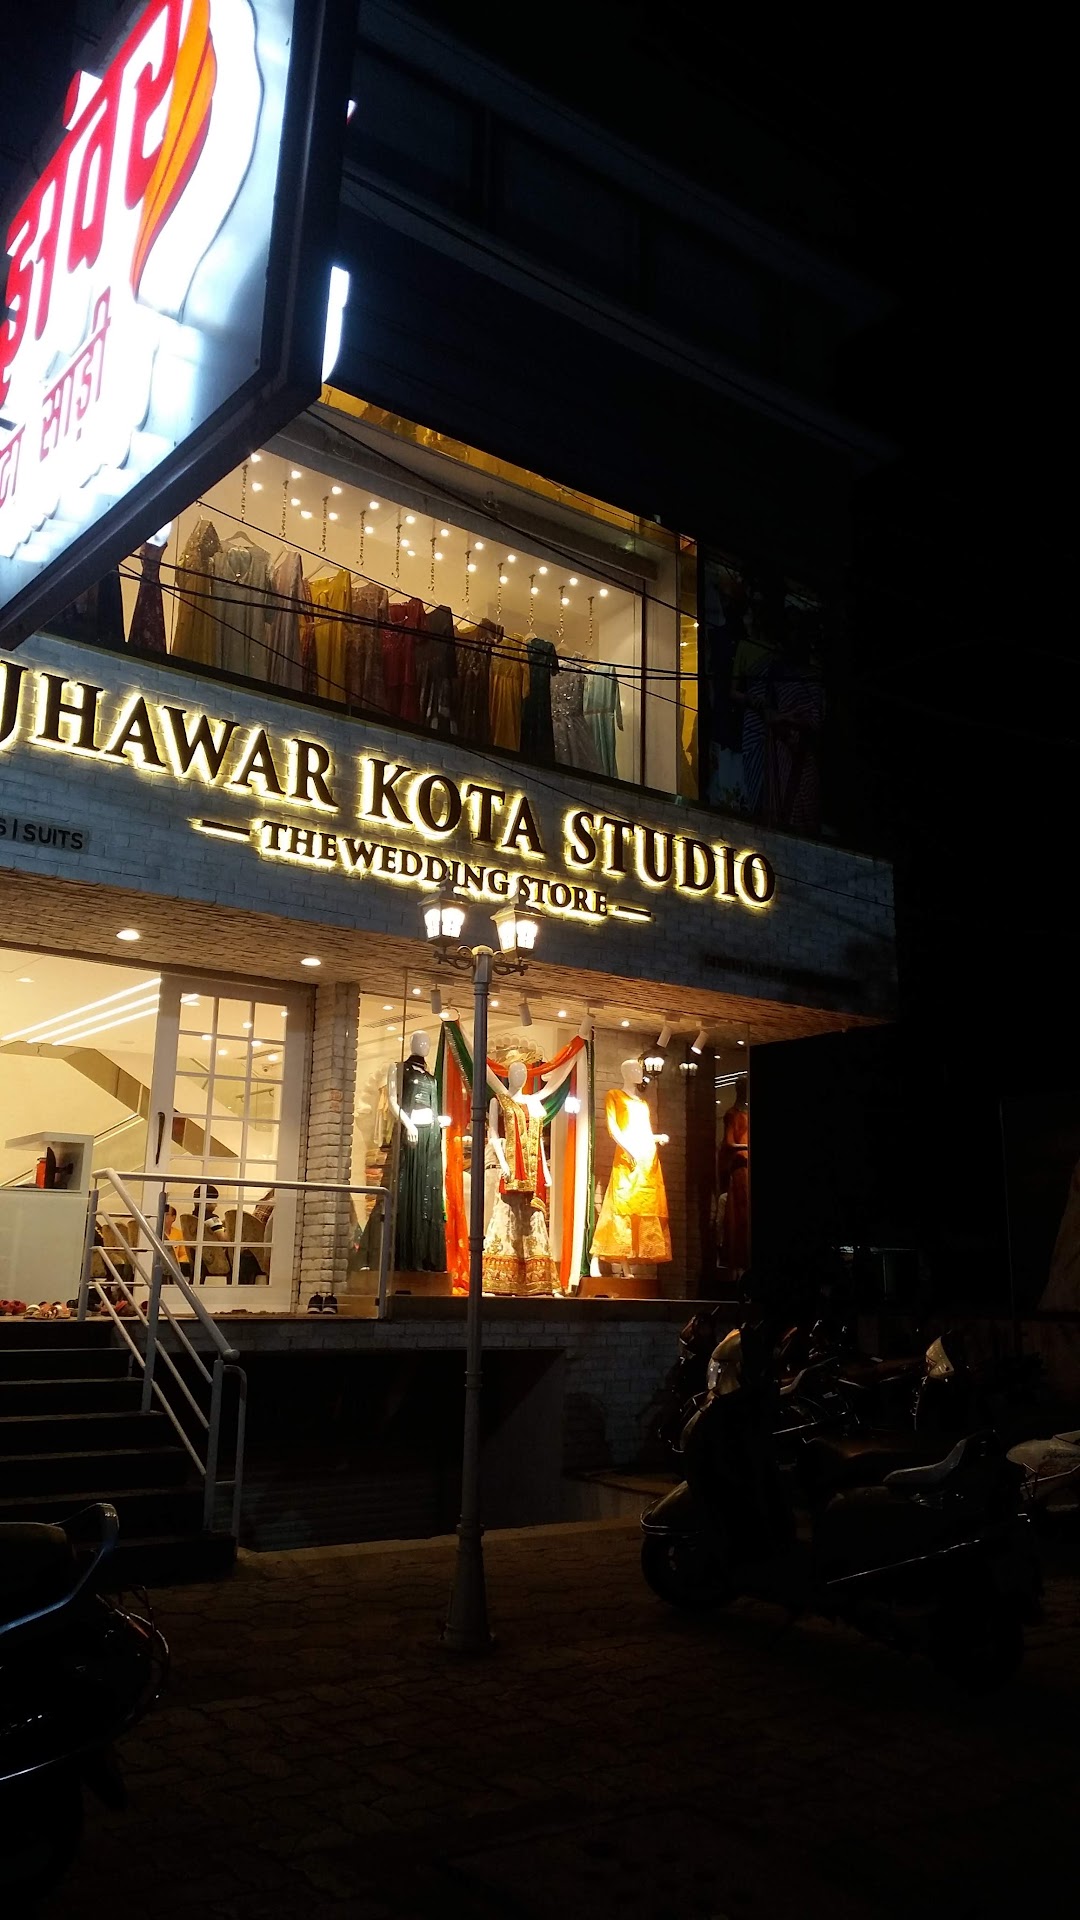 Jhawar Kota Studio - The Wedding Store